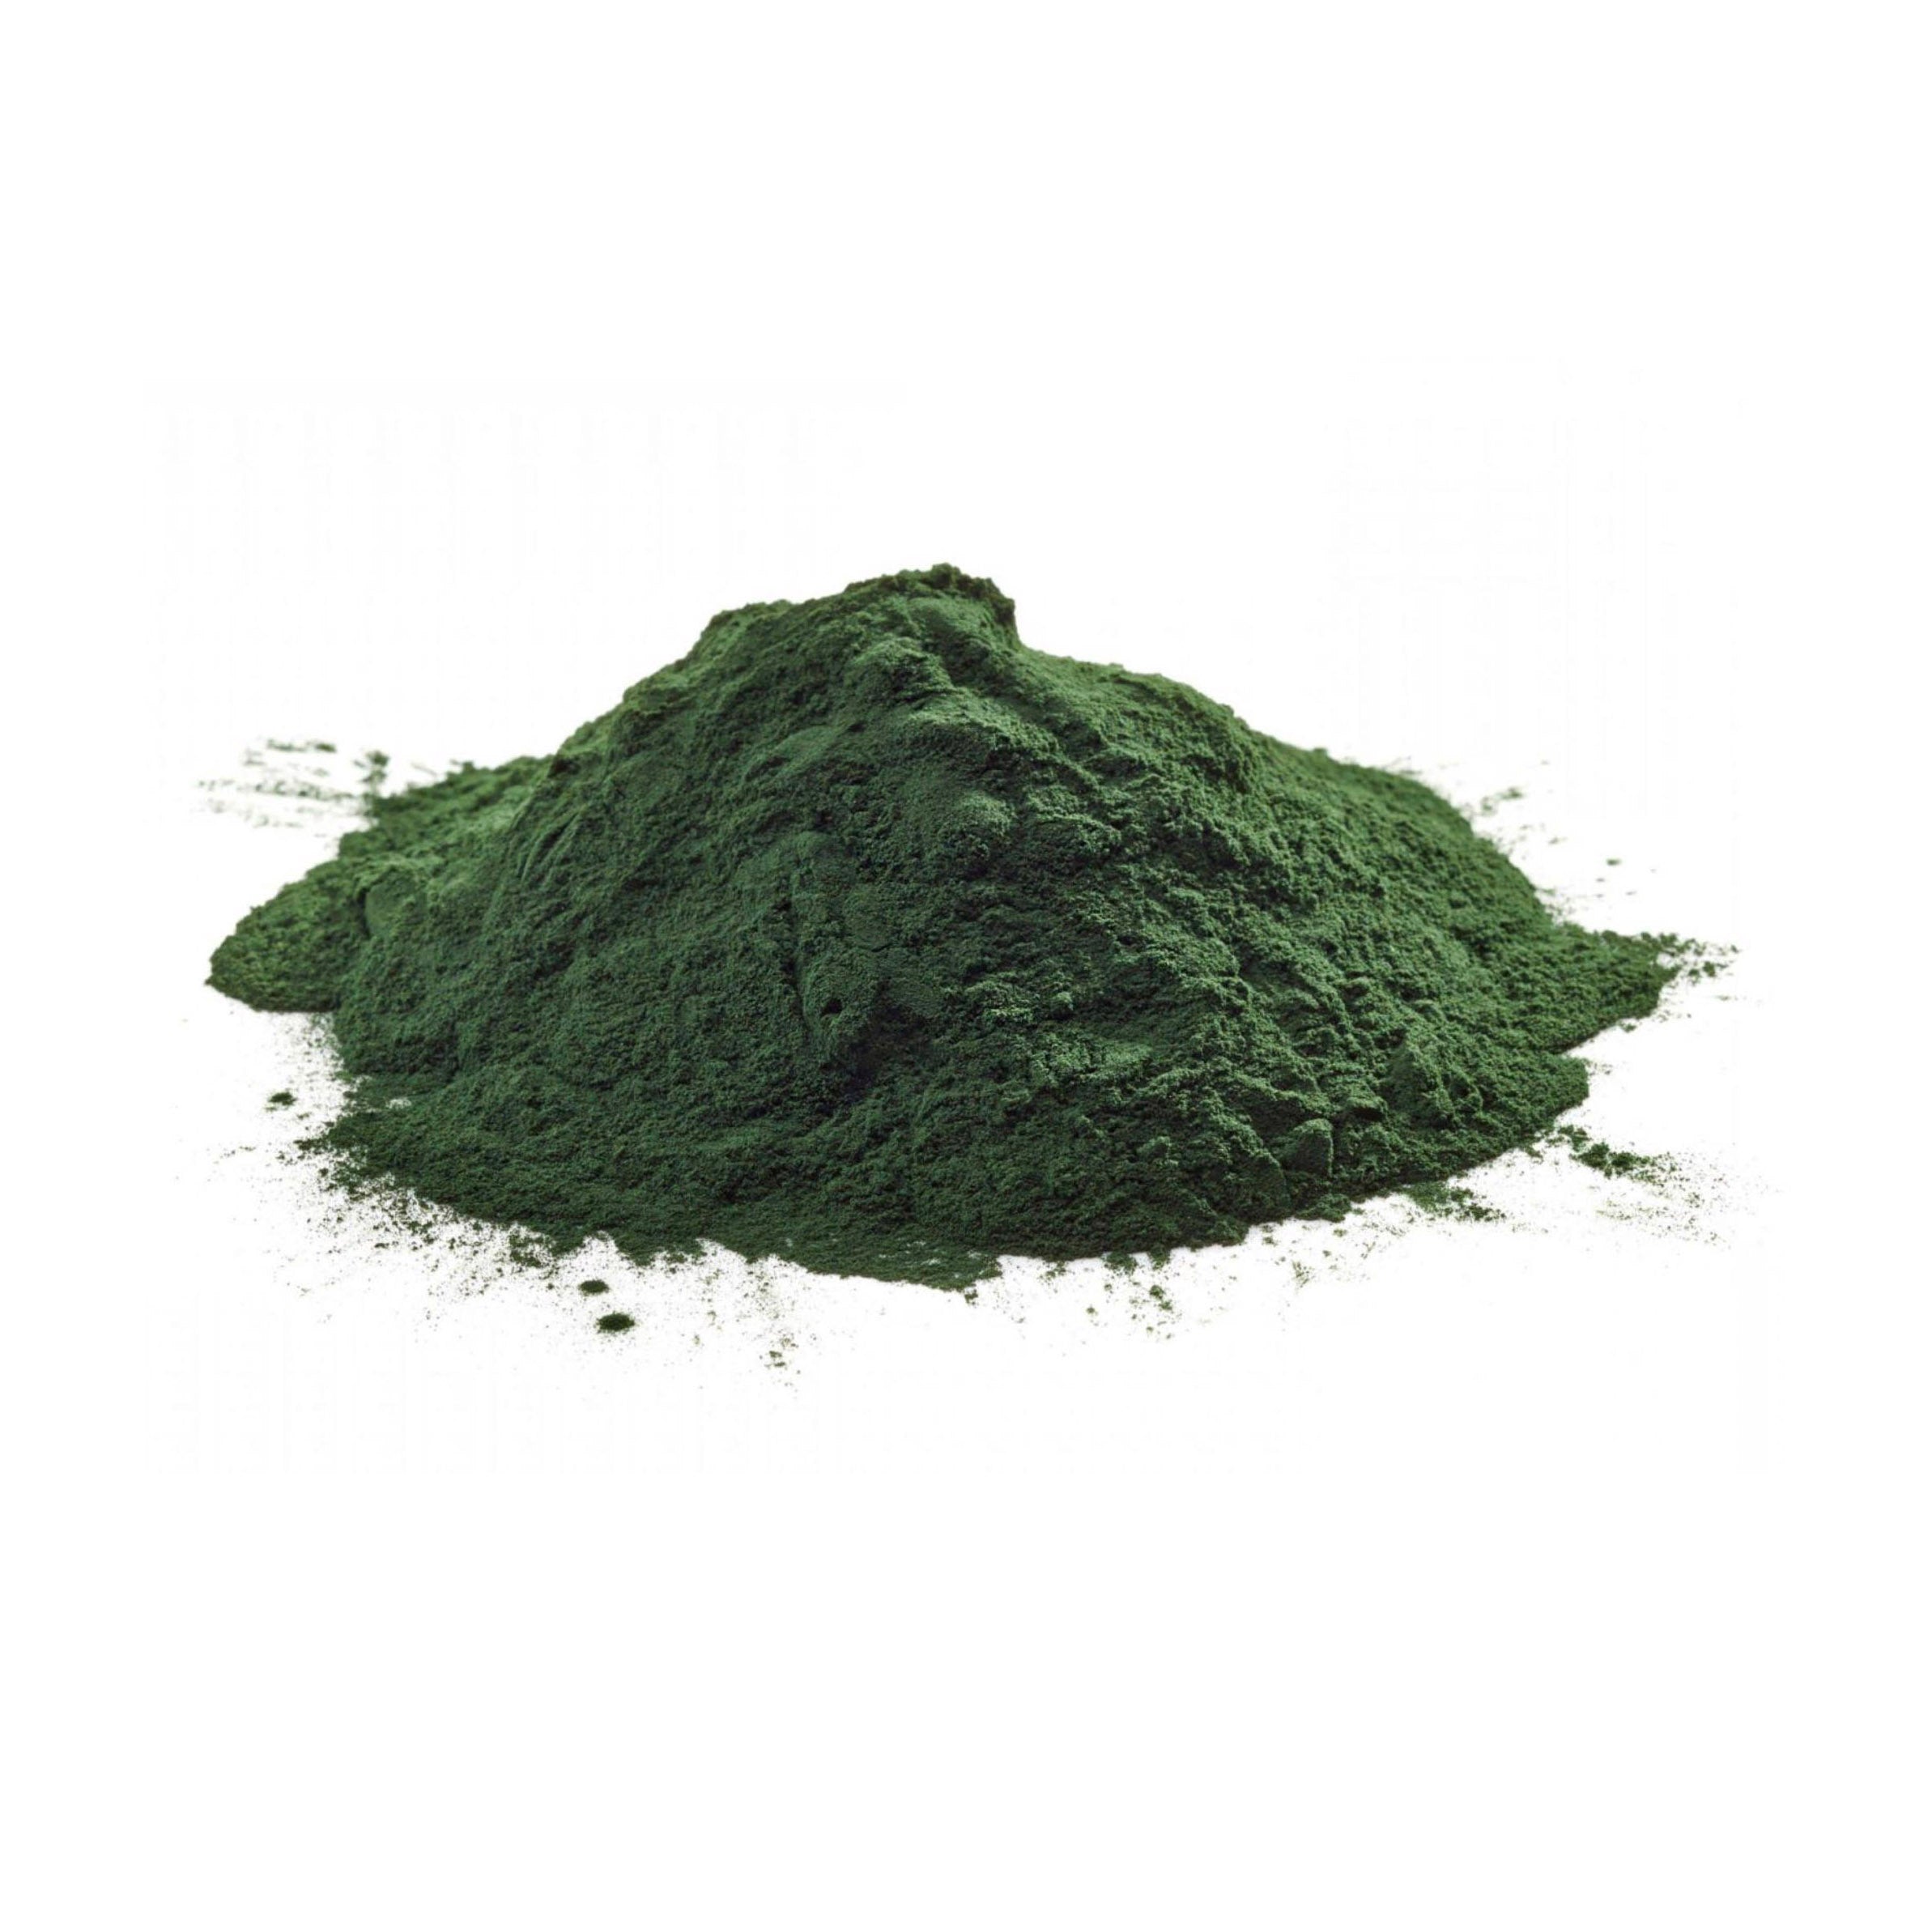 GUSTA SUPPLIES Organic Spirulina, Blue-Green Algae Powder